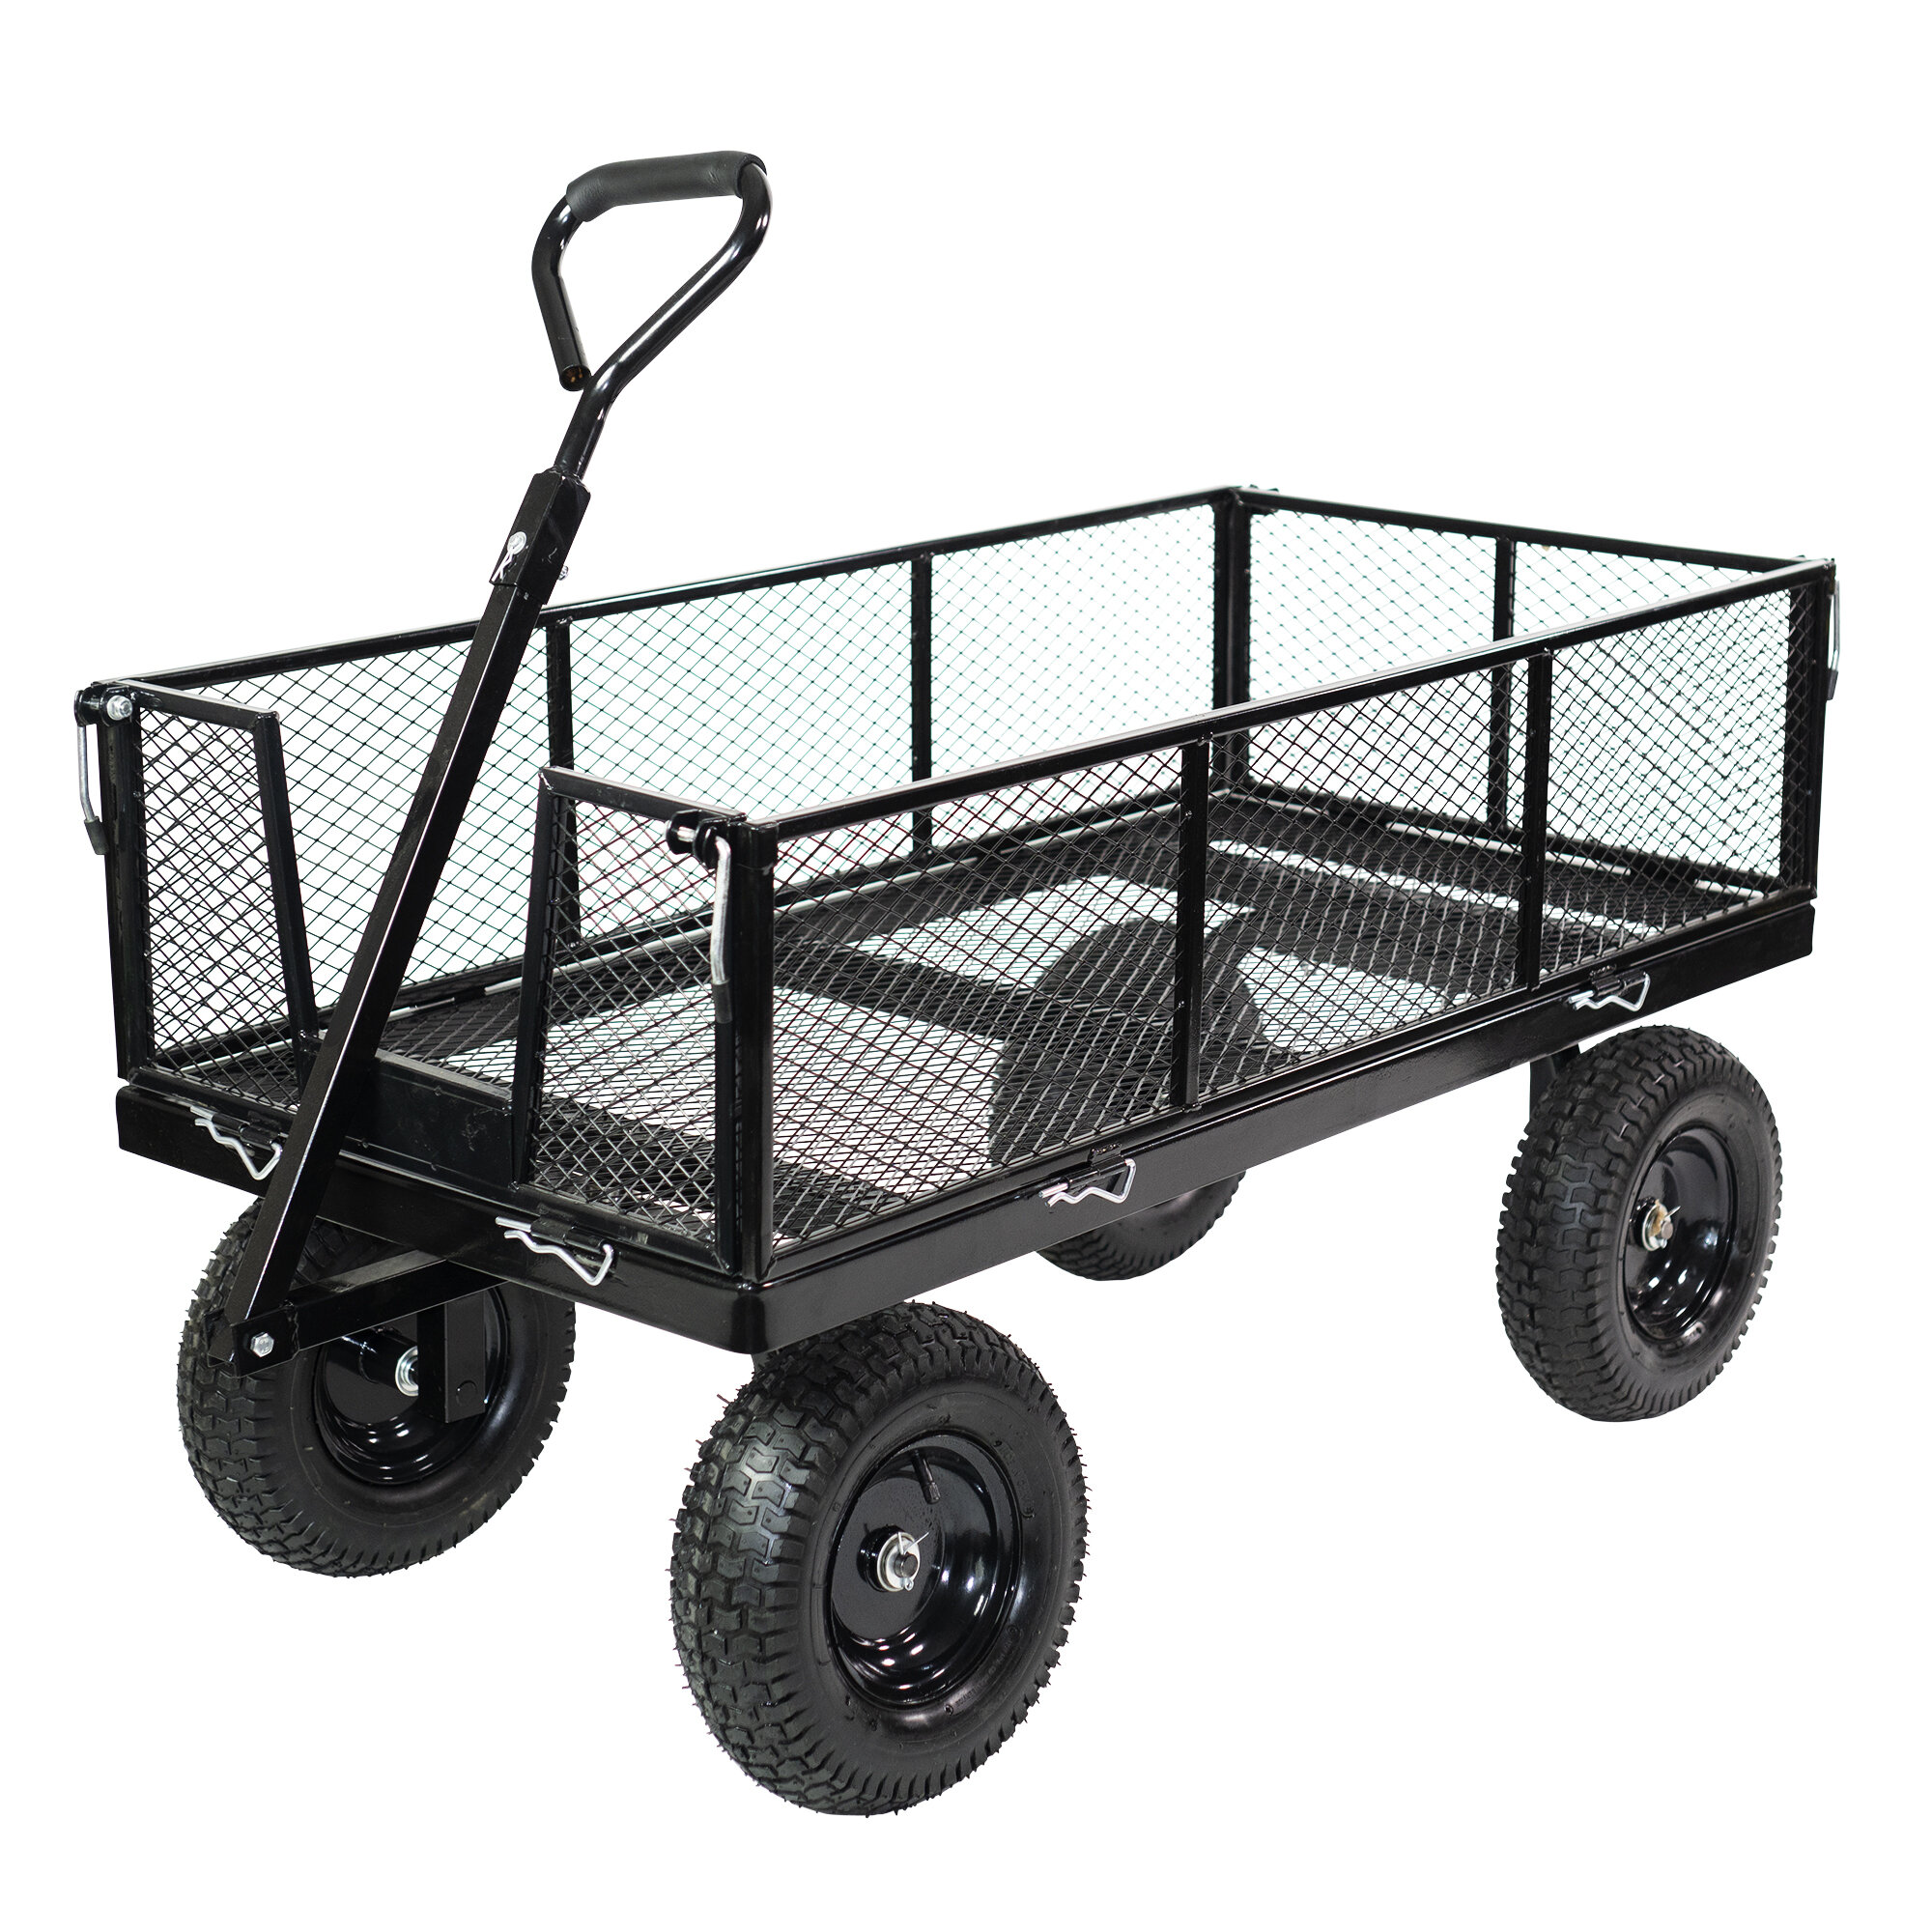 Rubbermaid Heavy Duty Utility Cart - 2 Shelves 8 Pneumatic Castors